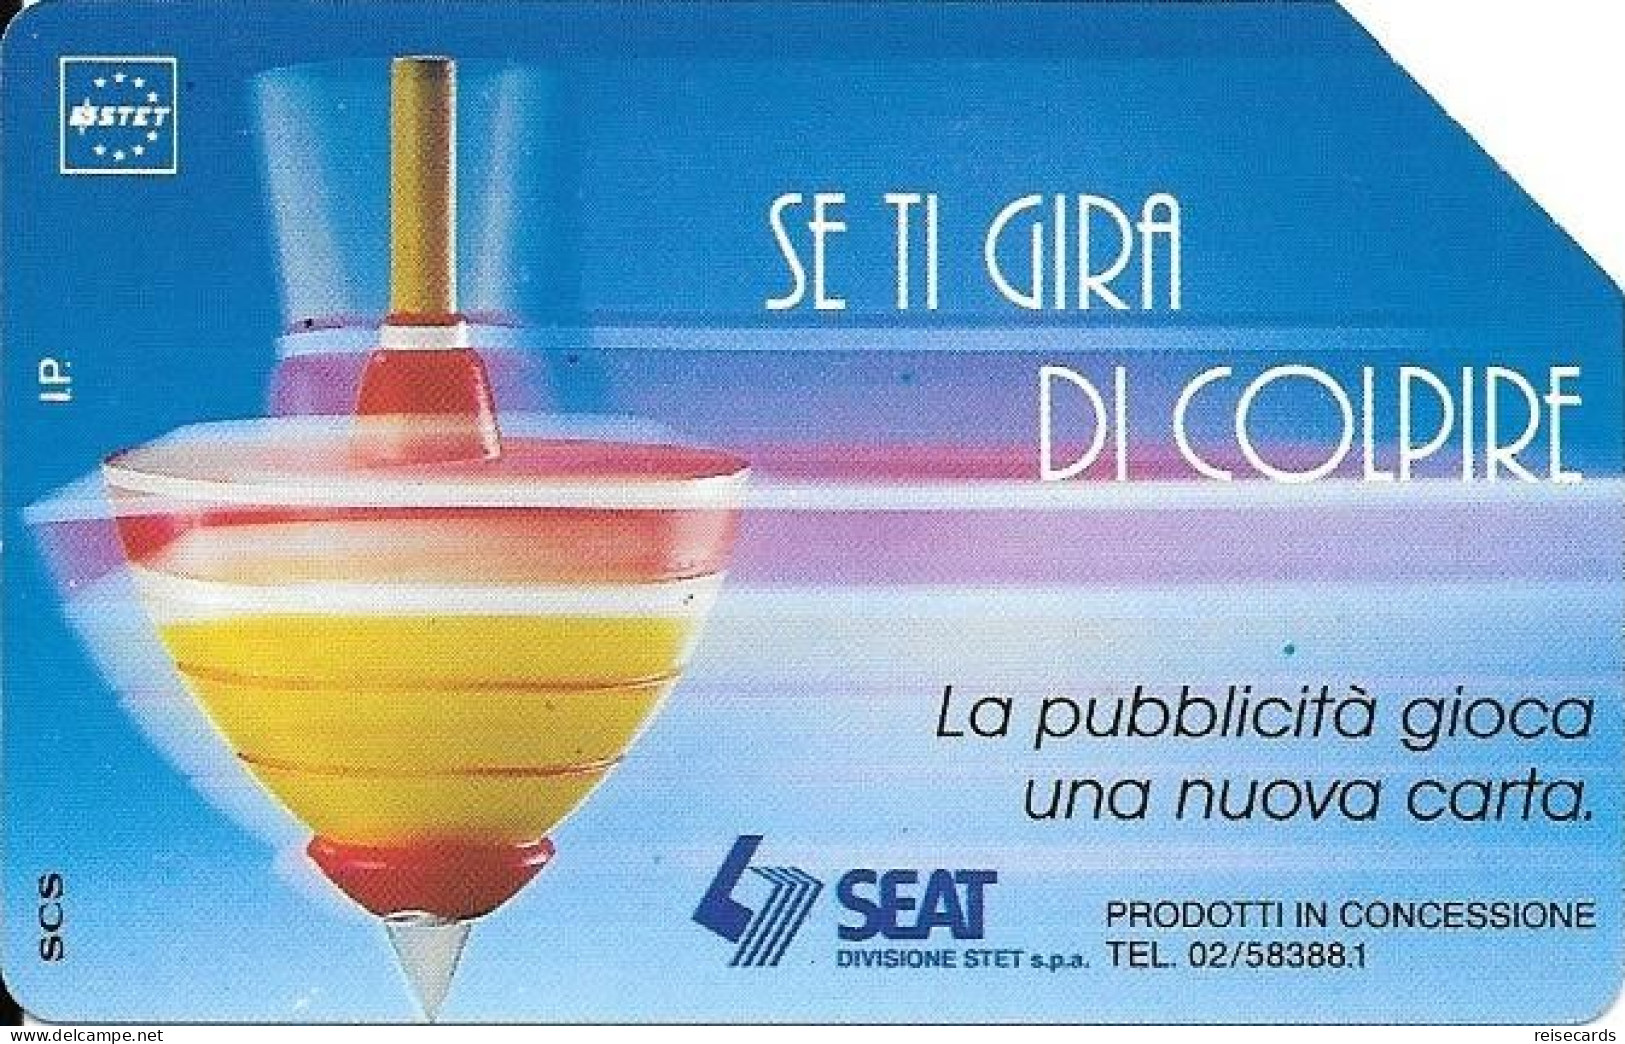 Italy: Telecom Italia SIP - SEAT Se Ti Gira Di Colpire - Publiques Publicitaires